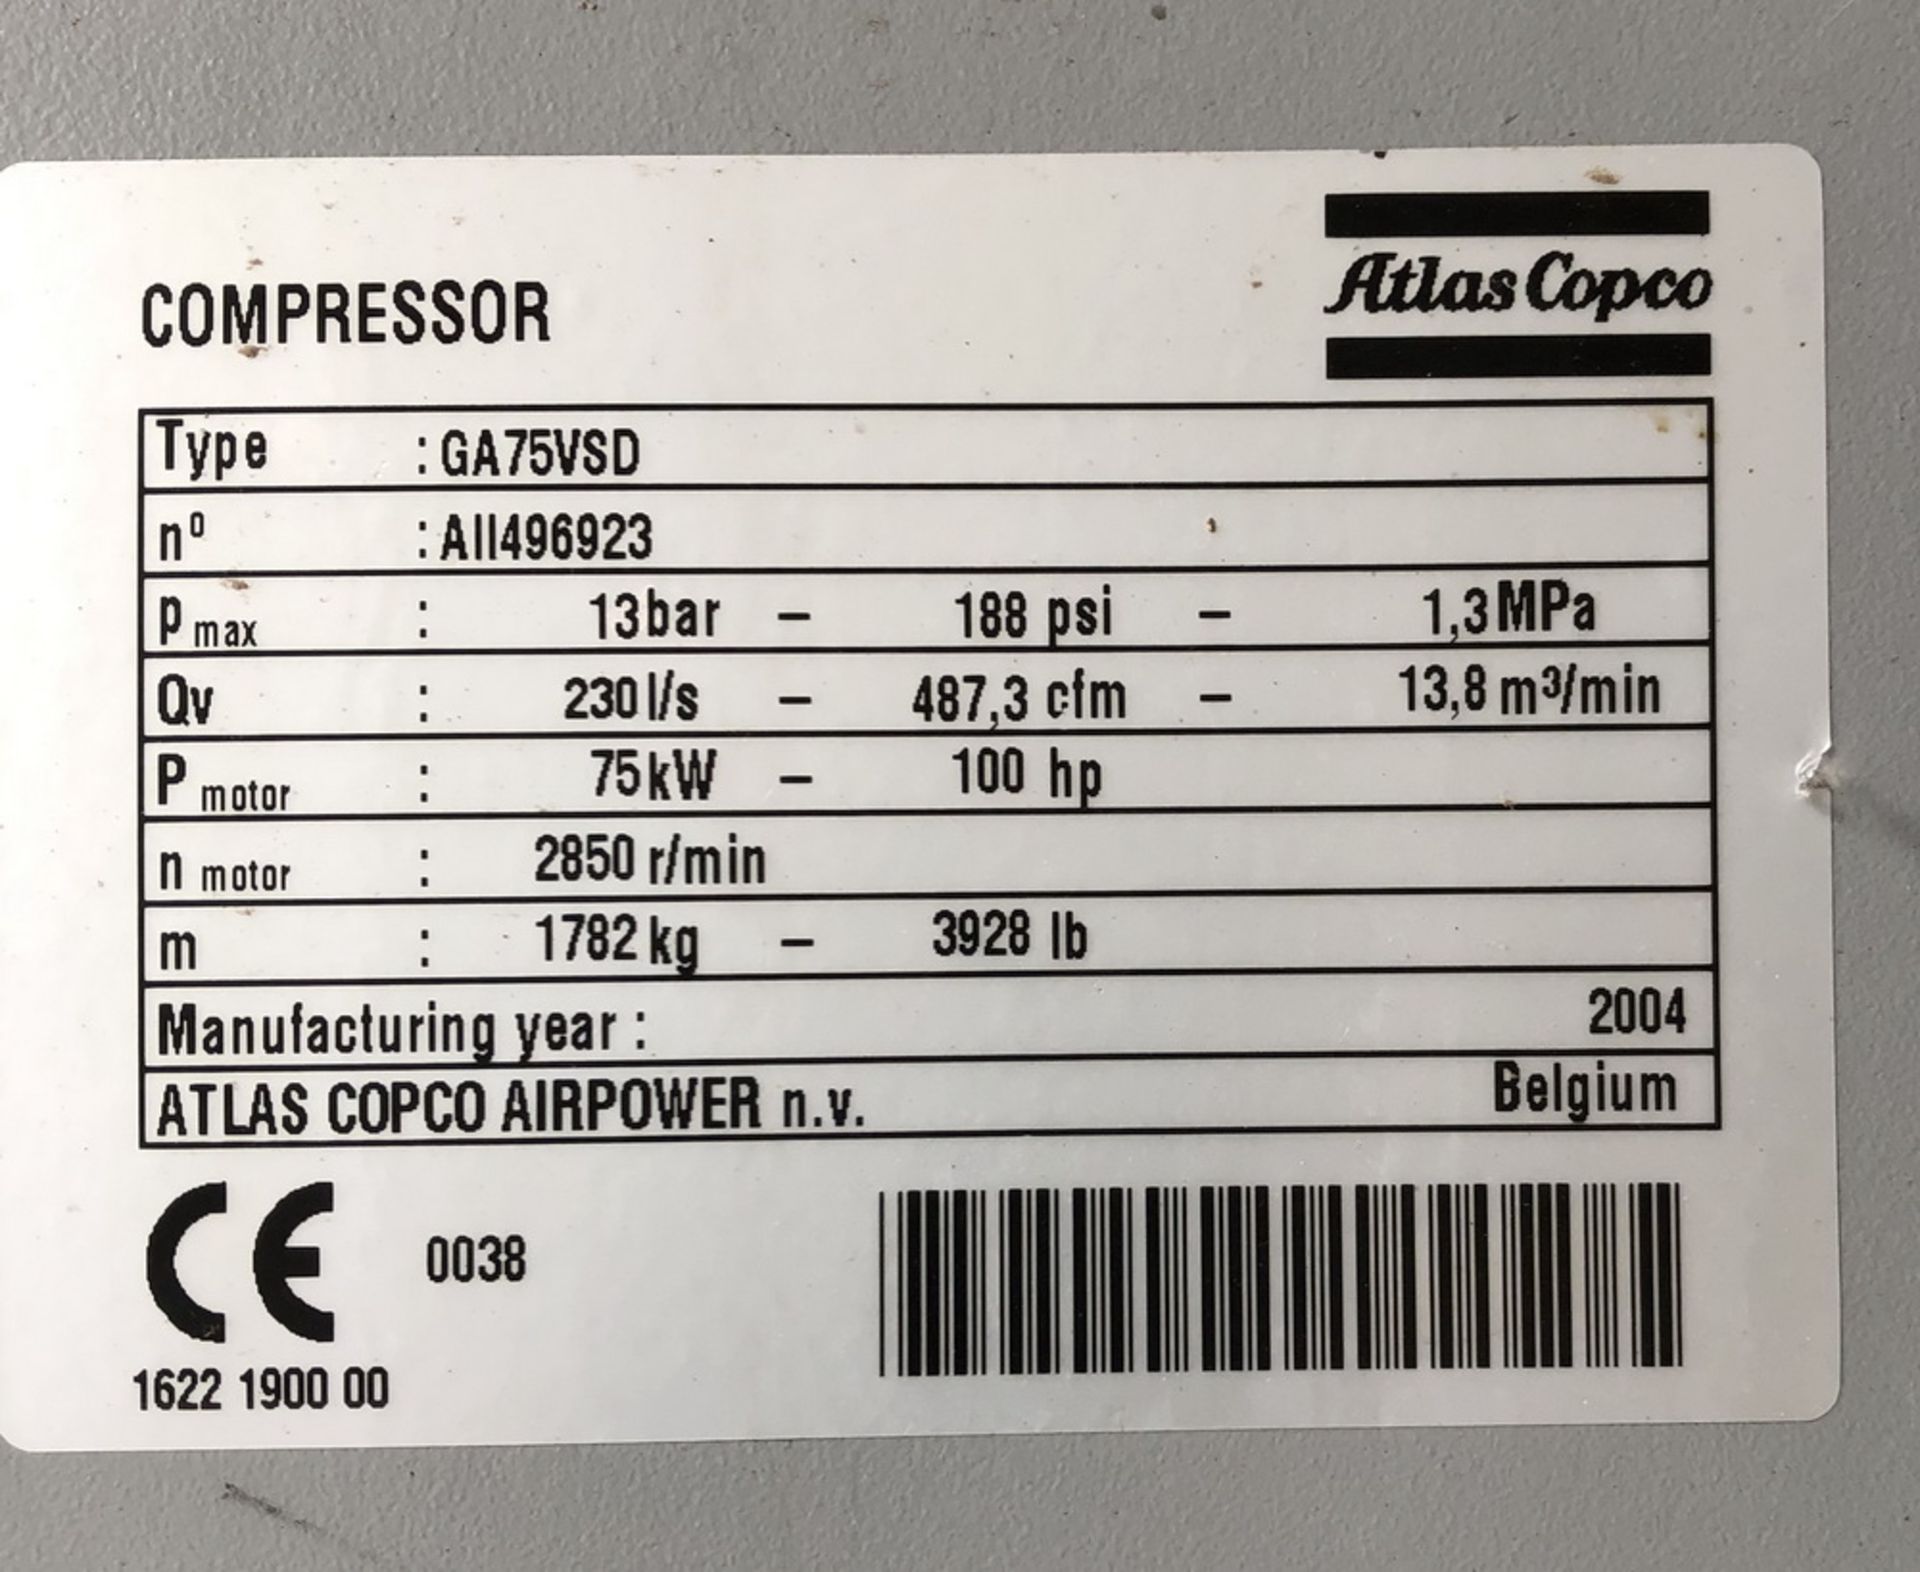 Atlas Copco Air Compressor, Model GA75VSD, S/N All496923, 100 HP, 487cfm @188 psi, new 2004 - Image 3 of 3